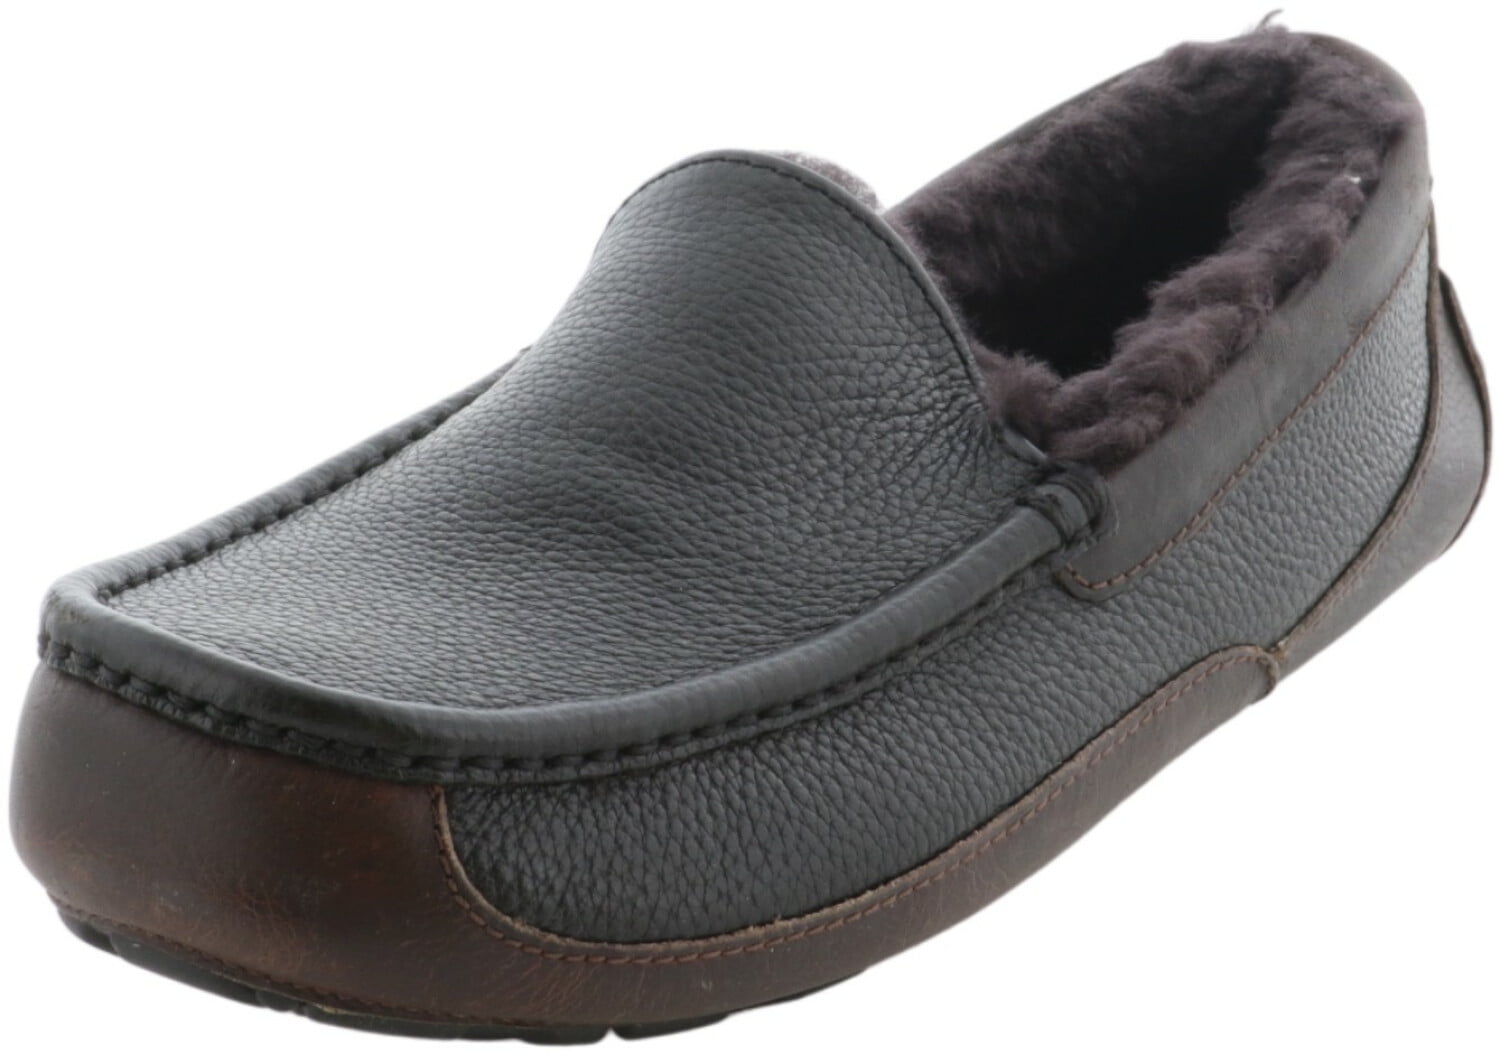 Ugg Men's Ascot Black / China Teal Ankle-High Wool Slipper - 8M ...